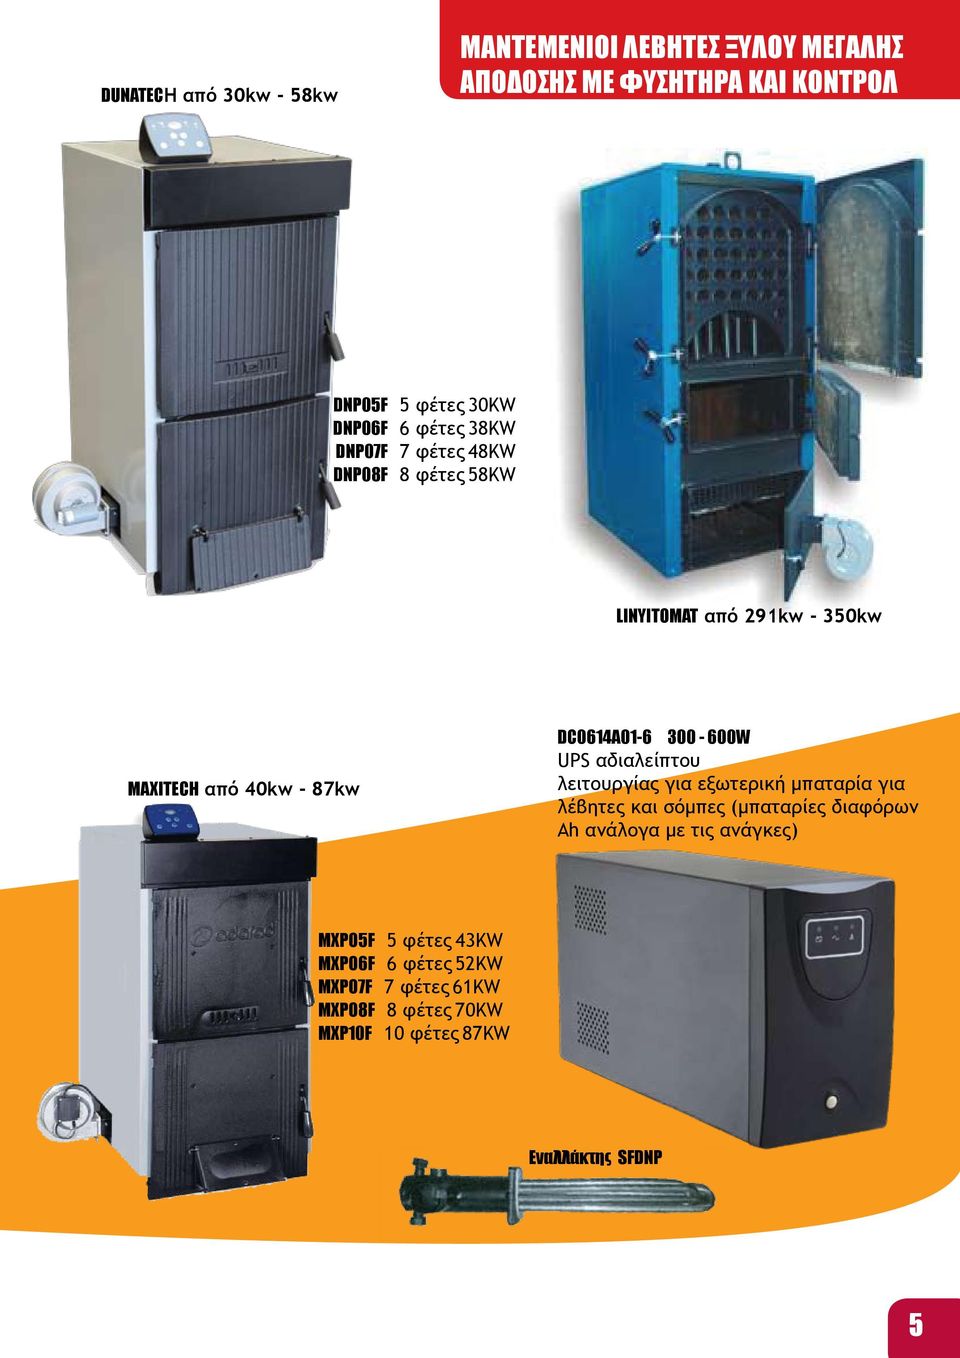 300-600W UPS αδιαλείπτου λειτουργίας για εξωτερική μπαταρία για λέβητες και σόμπες (μπαταρίες διαφόρων Ah ανάλογα με τις